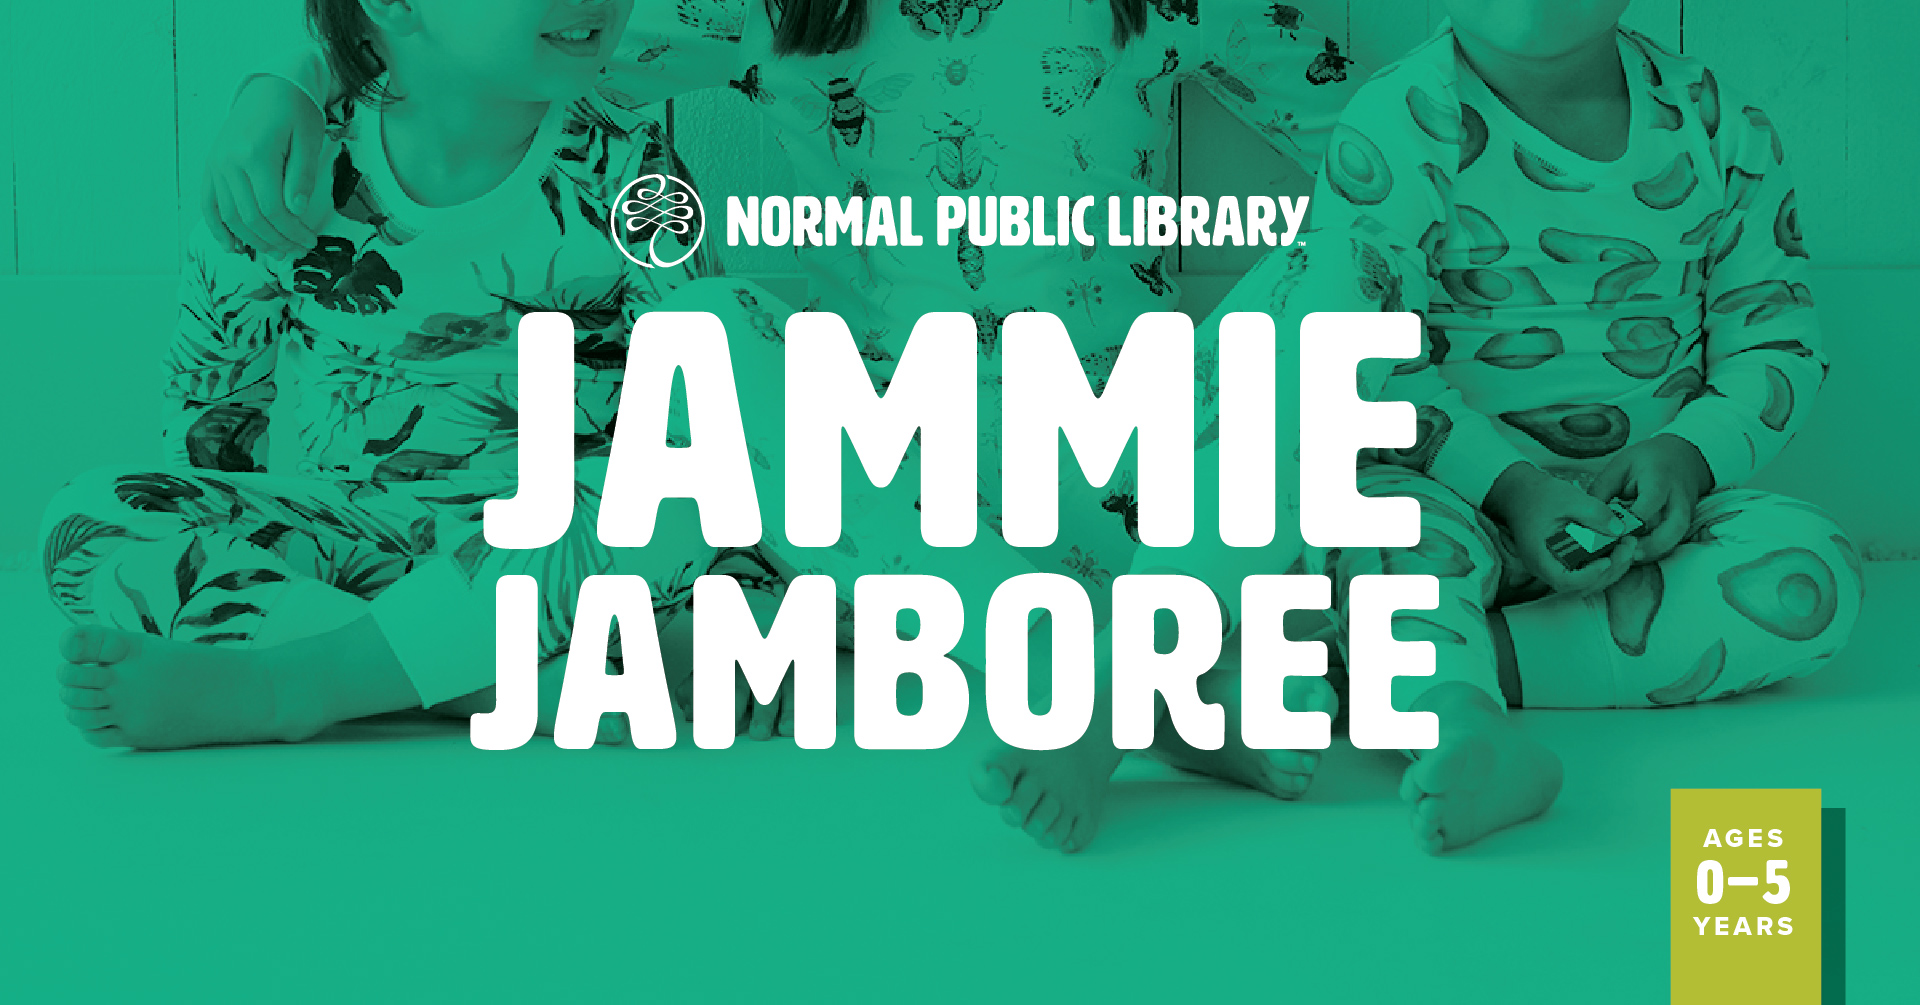 Image for Jammie Jamboree.